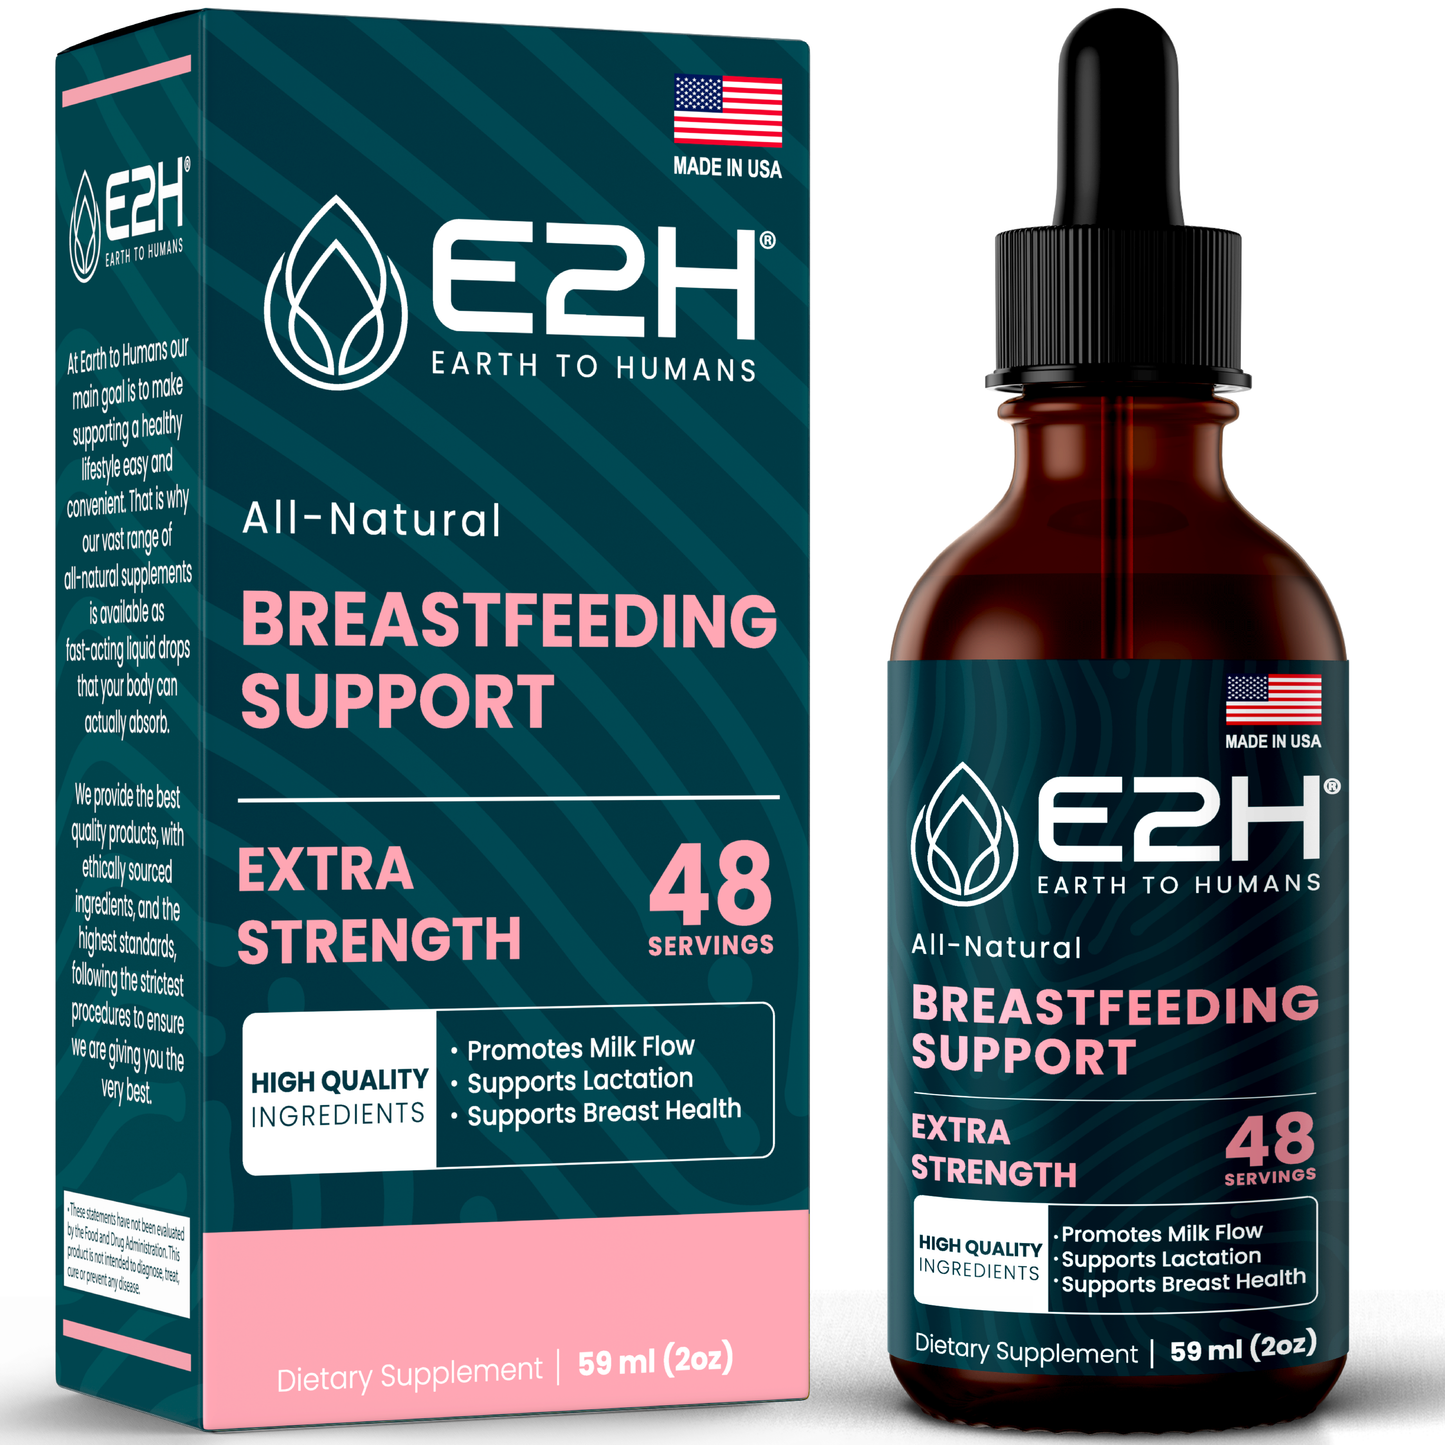 All-Natural BREASTFEEDING Support - Vegan - E2H